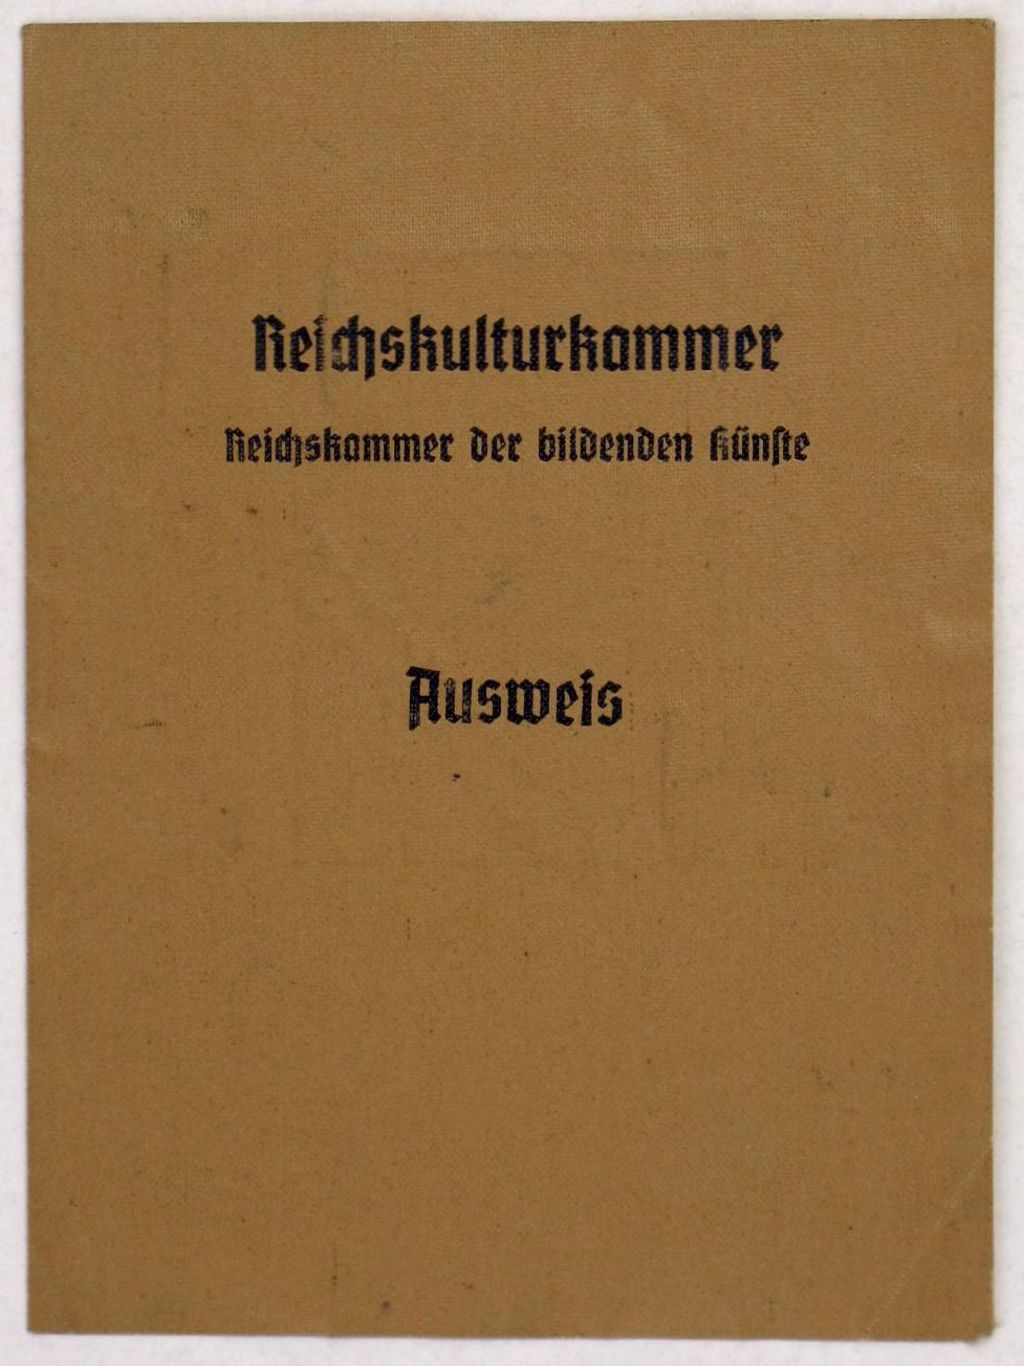 Exponat: Ausweis der Reichskulturkammer, 1937